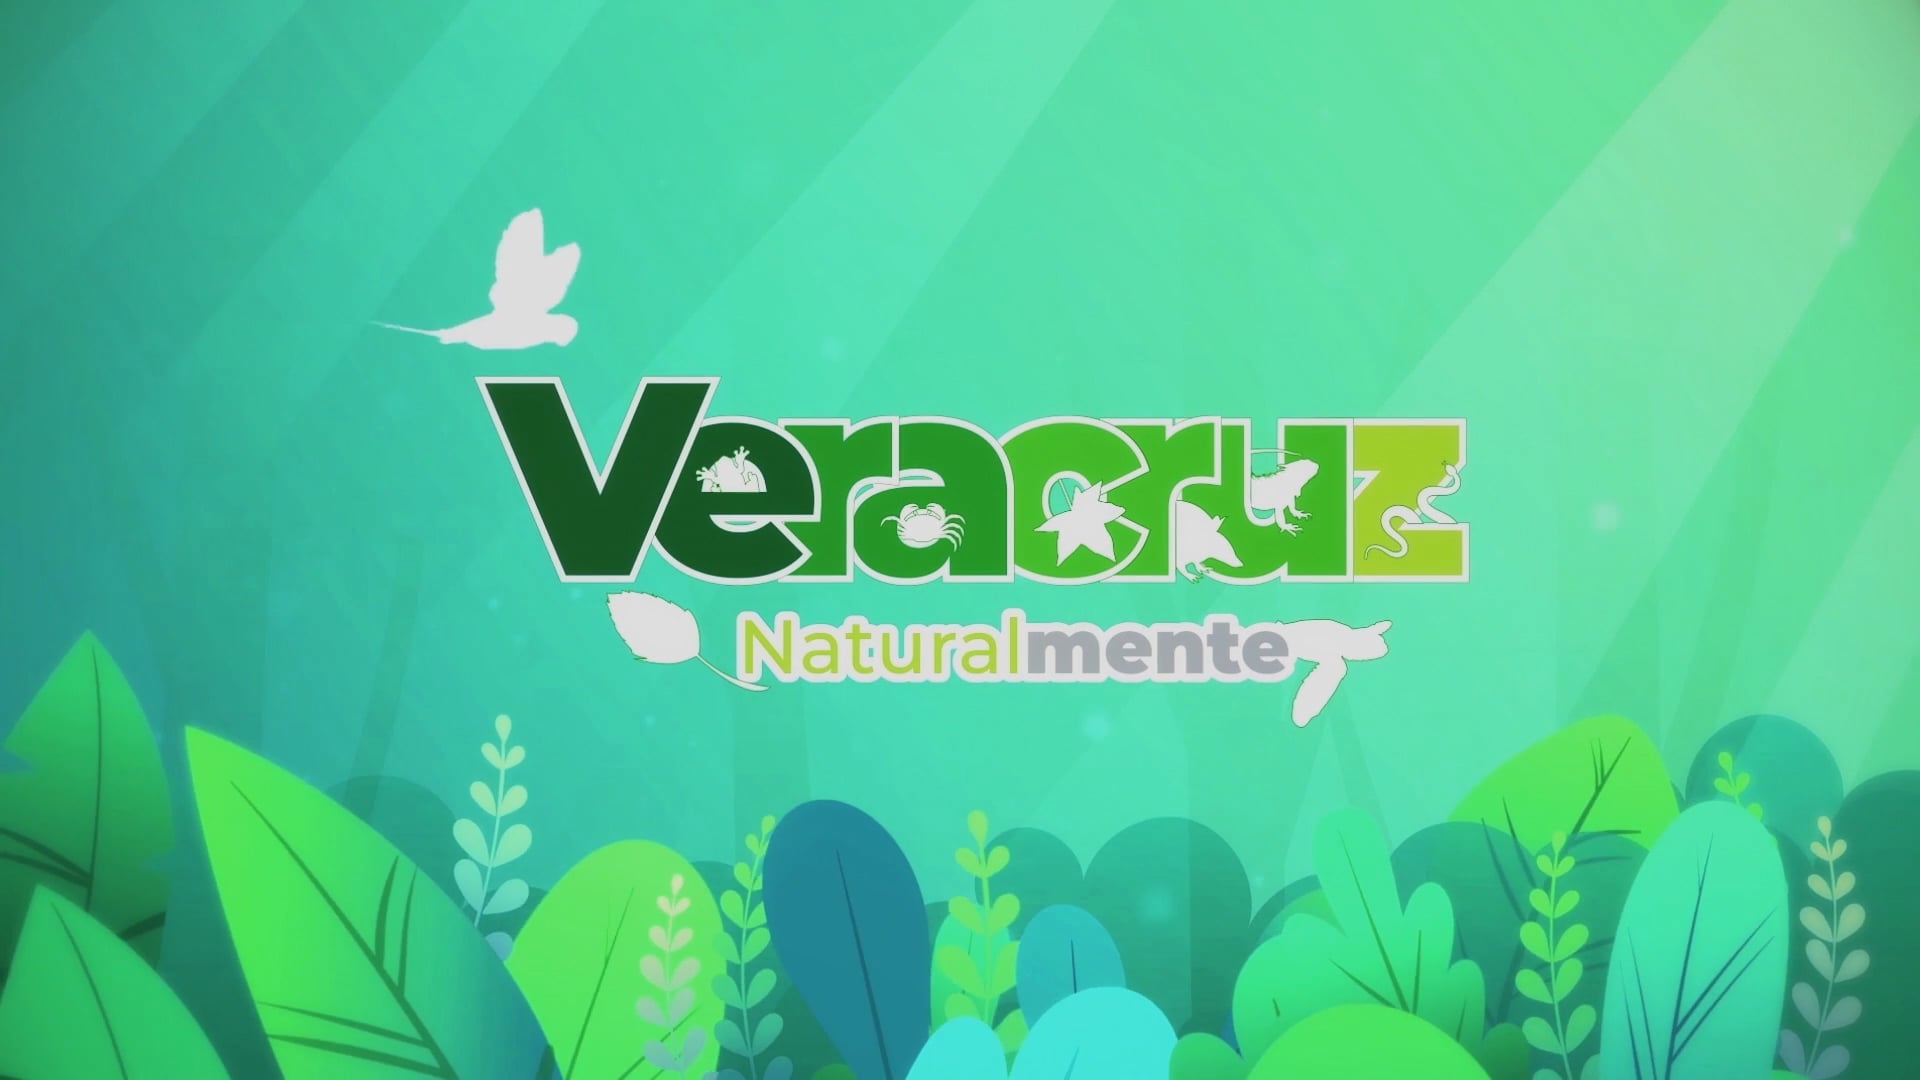 Veracruz Naturalmente